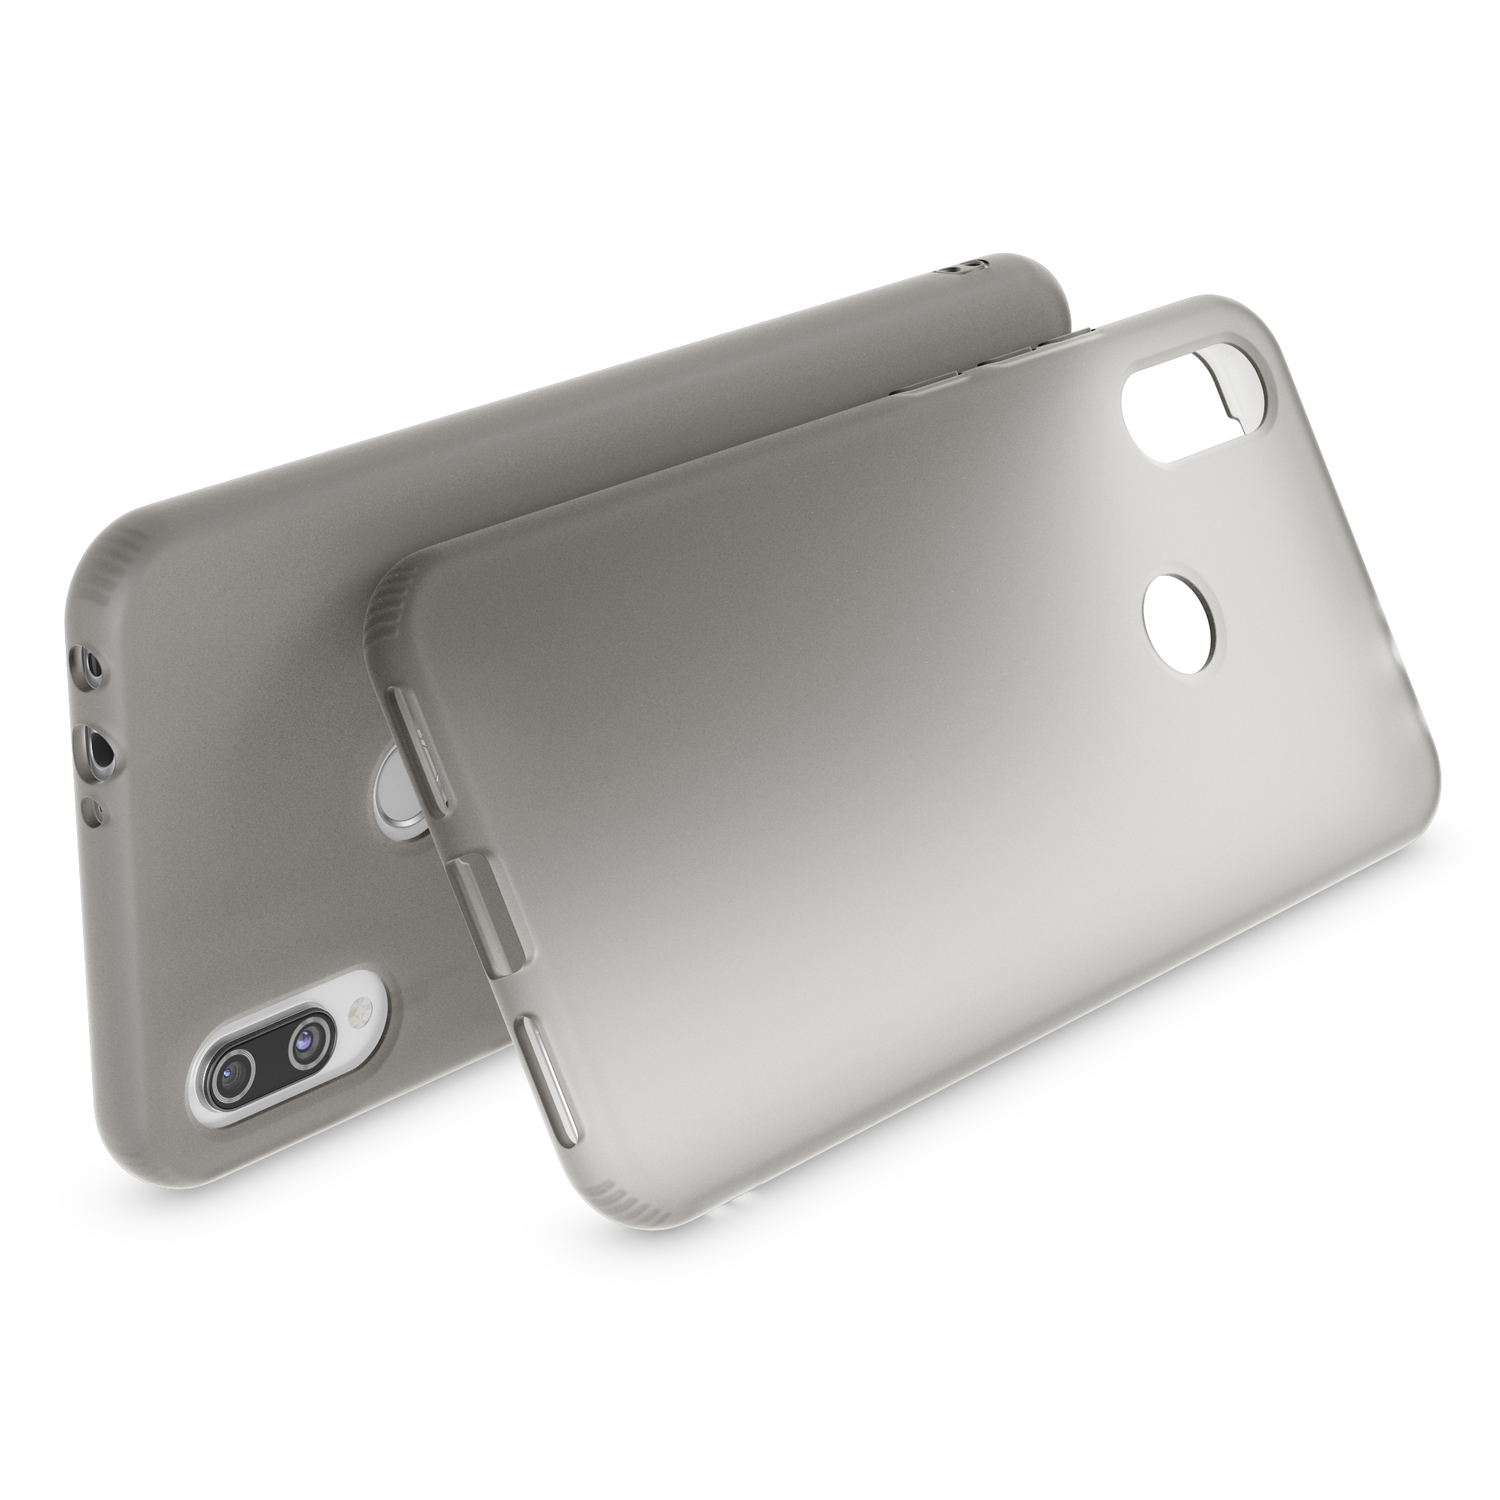 Semi-Transparente Redmi Schwarz Xiaomi, Note Backcover, 7, Silikon Hülle, NALIA